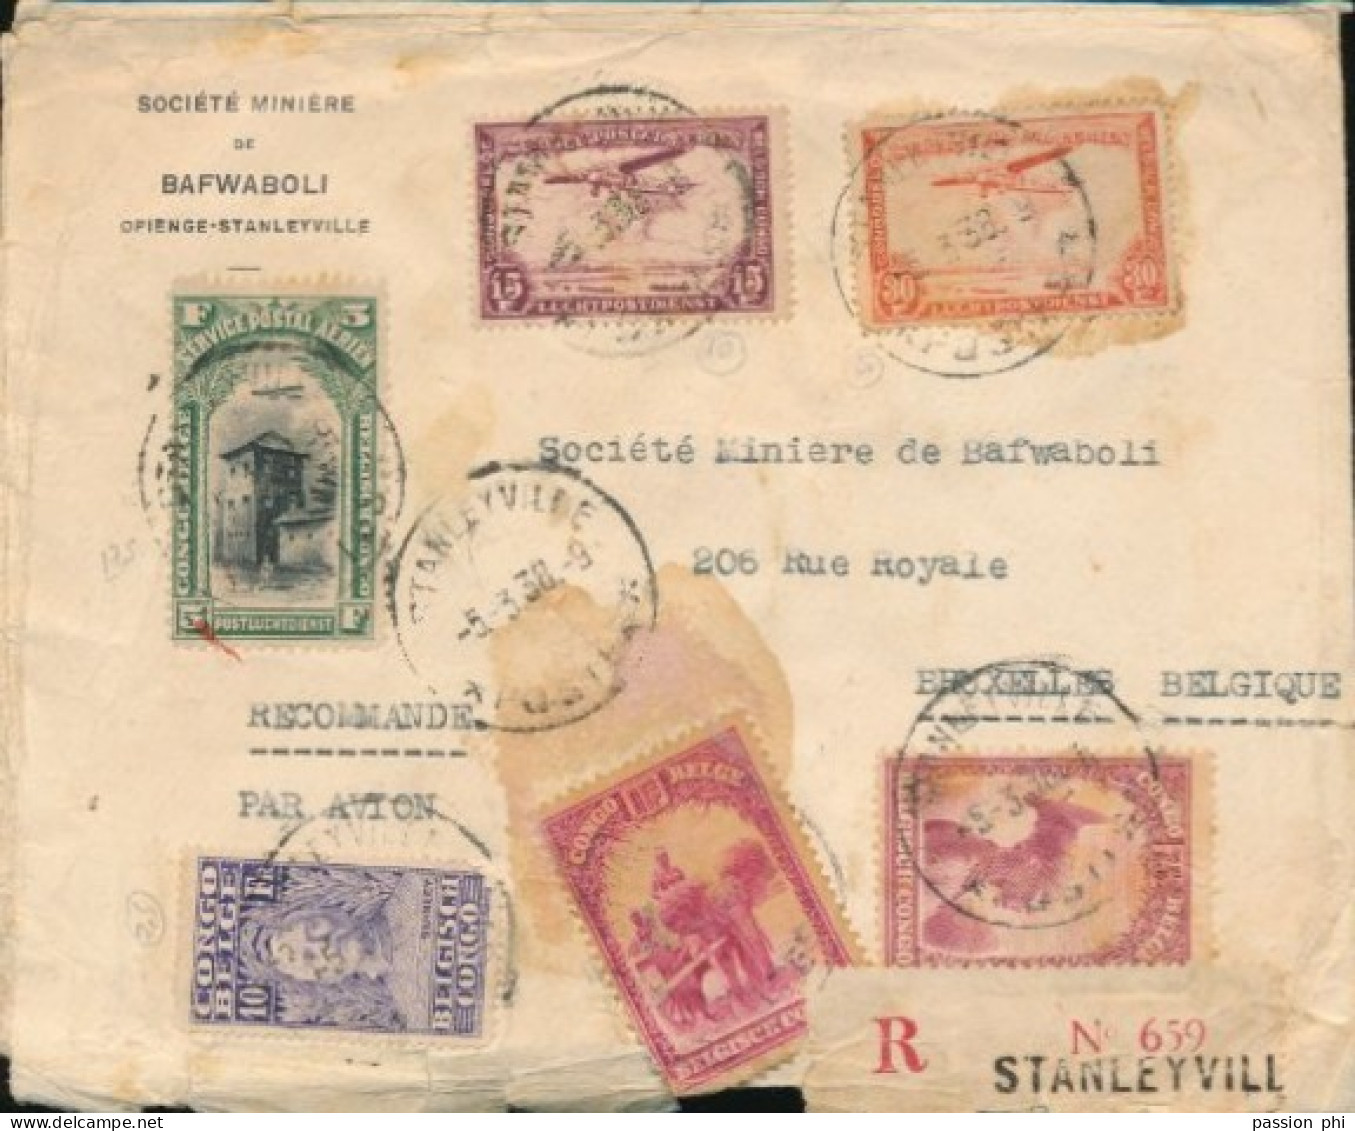 BELGIAN CONGO "SOCIETE MINIERE DE BAFWABOLI" LETTRE DE PA EN RECOMMANDE DE STAN. 05.03.38 VERS BRUXELLES - Storia Postale